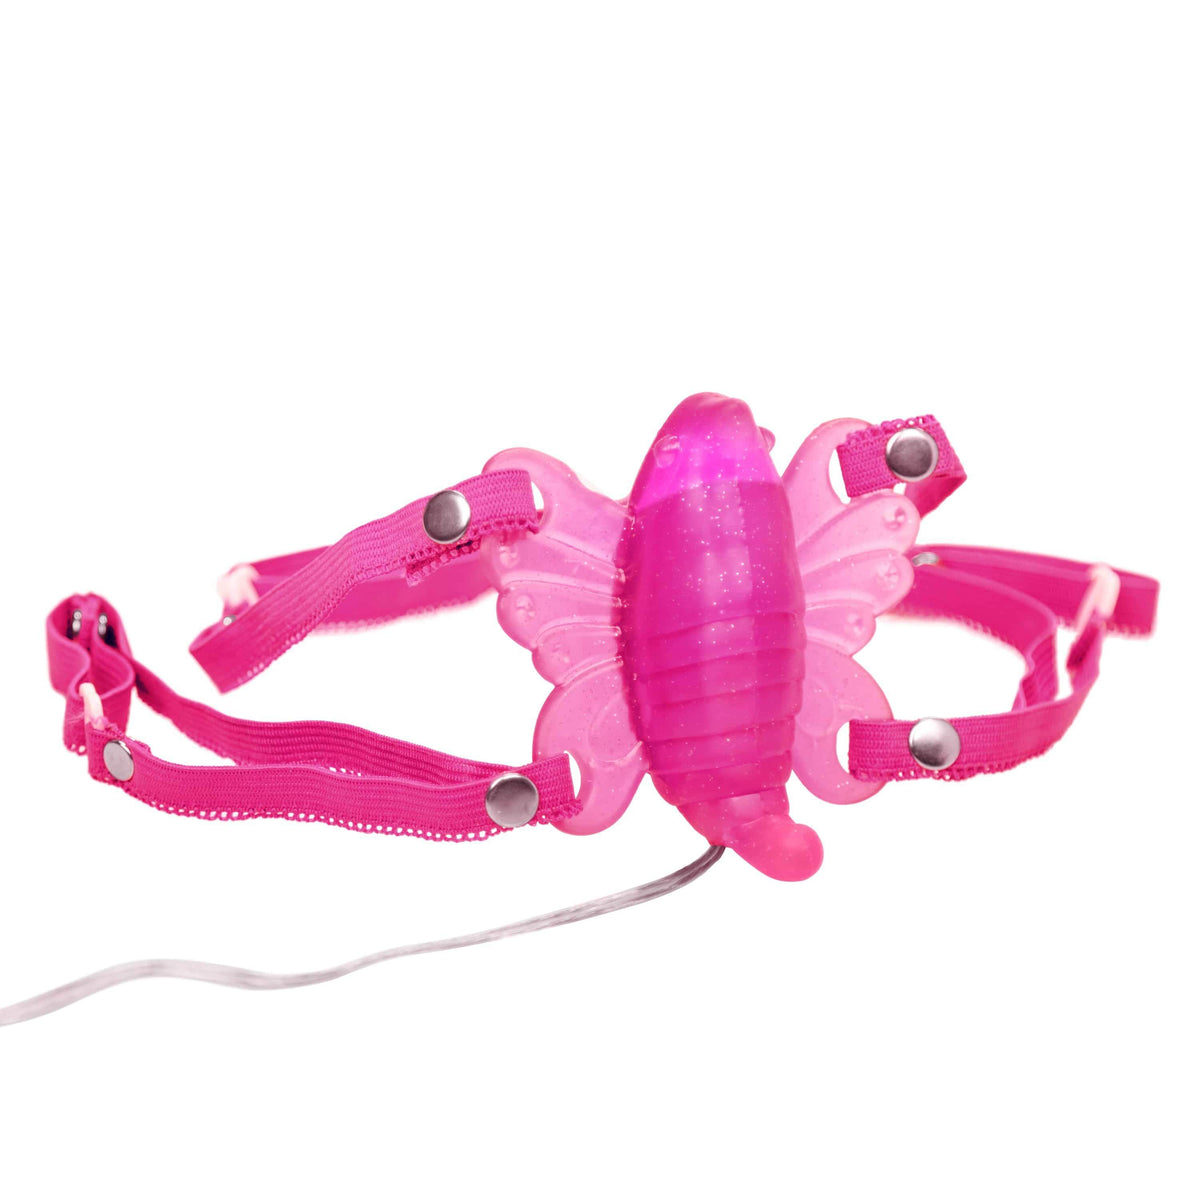 California Exotics - Venus Butterfly Original Remote Clit Massager (Pink)    Clit Massager (Vibration) Non Rechargeable